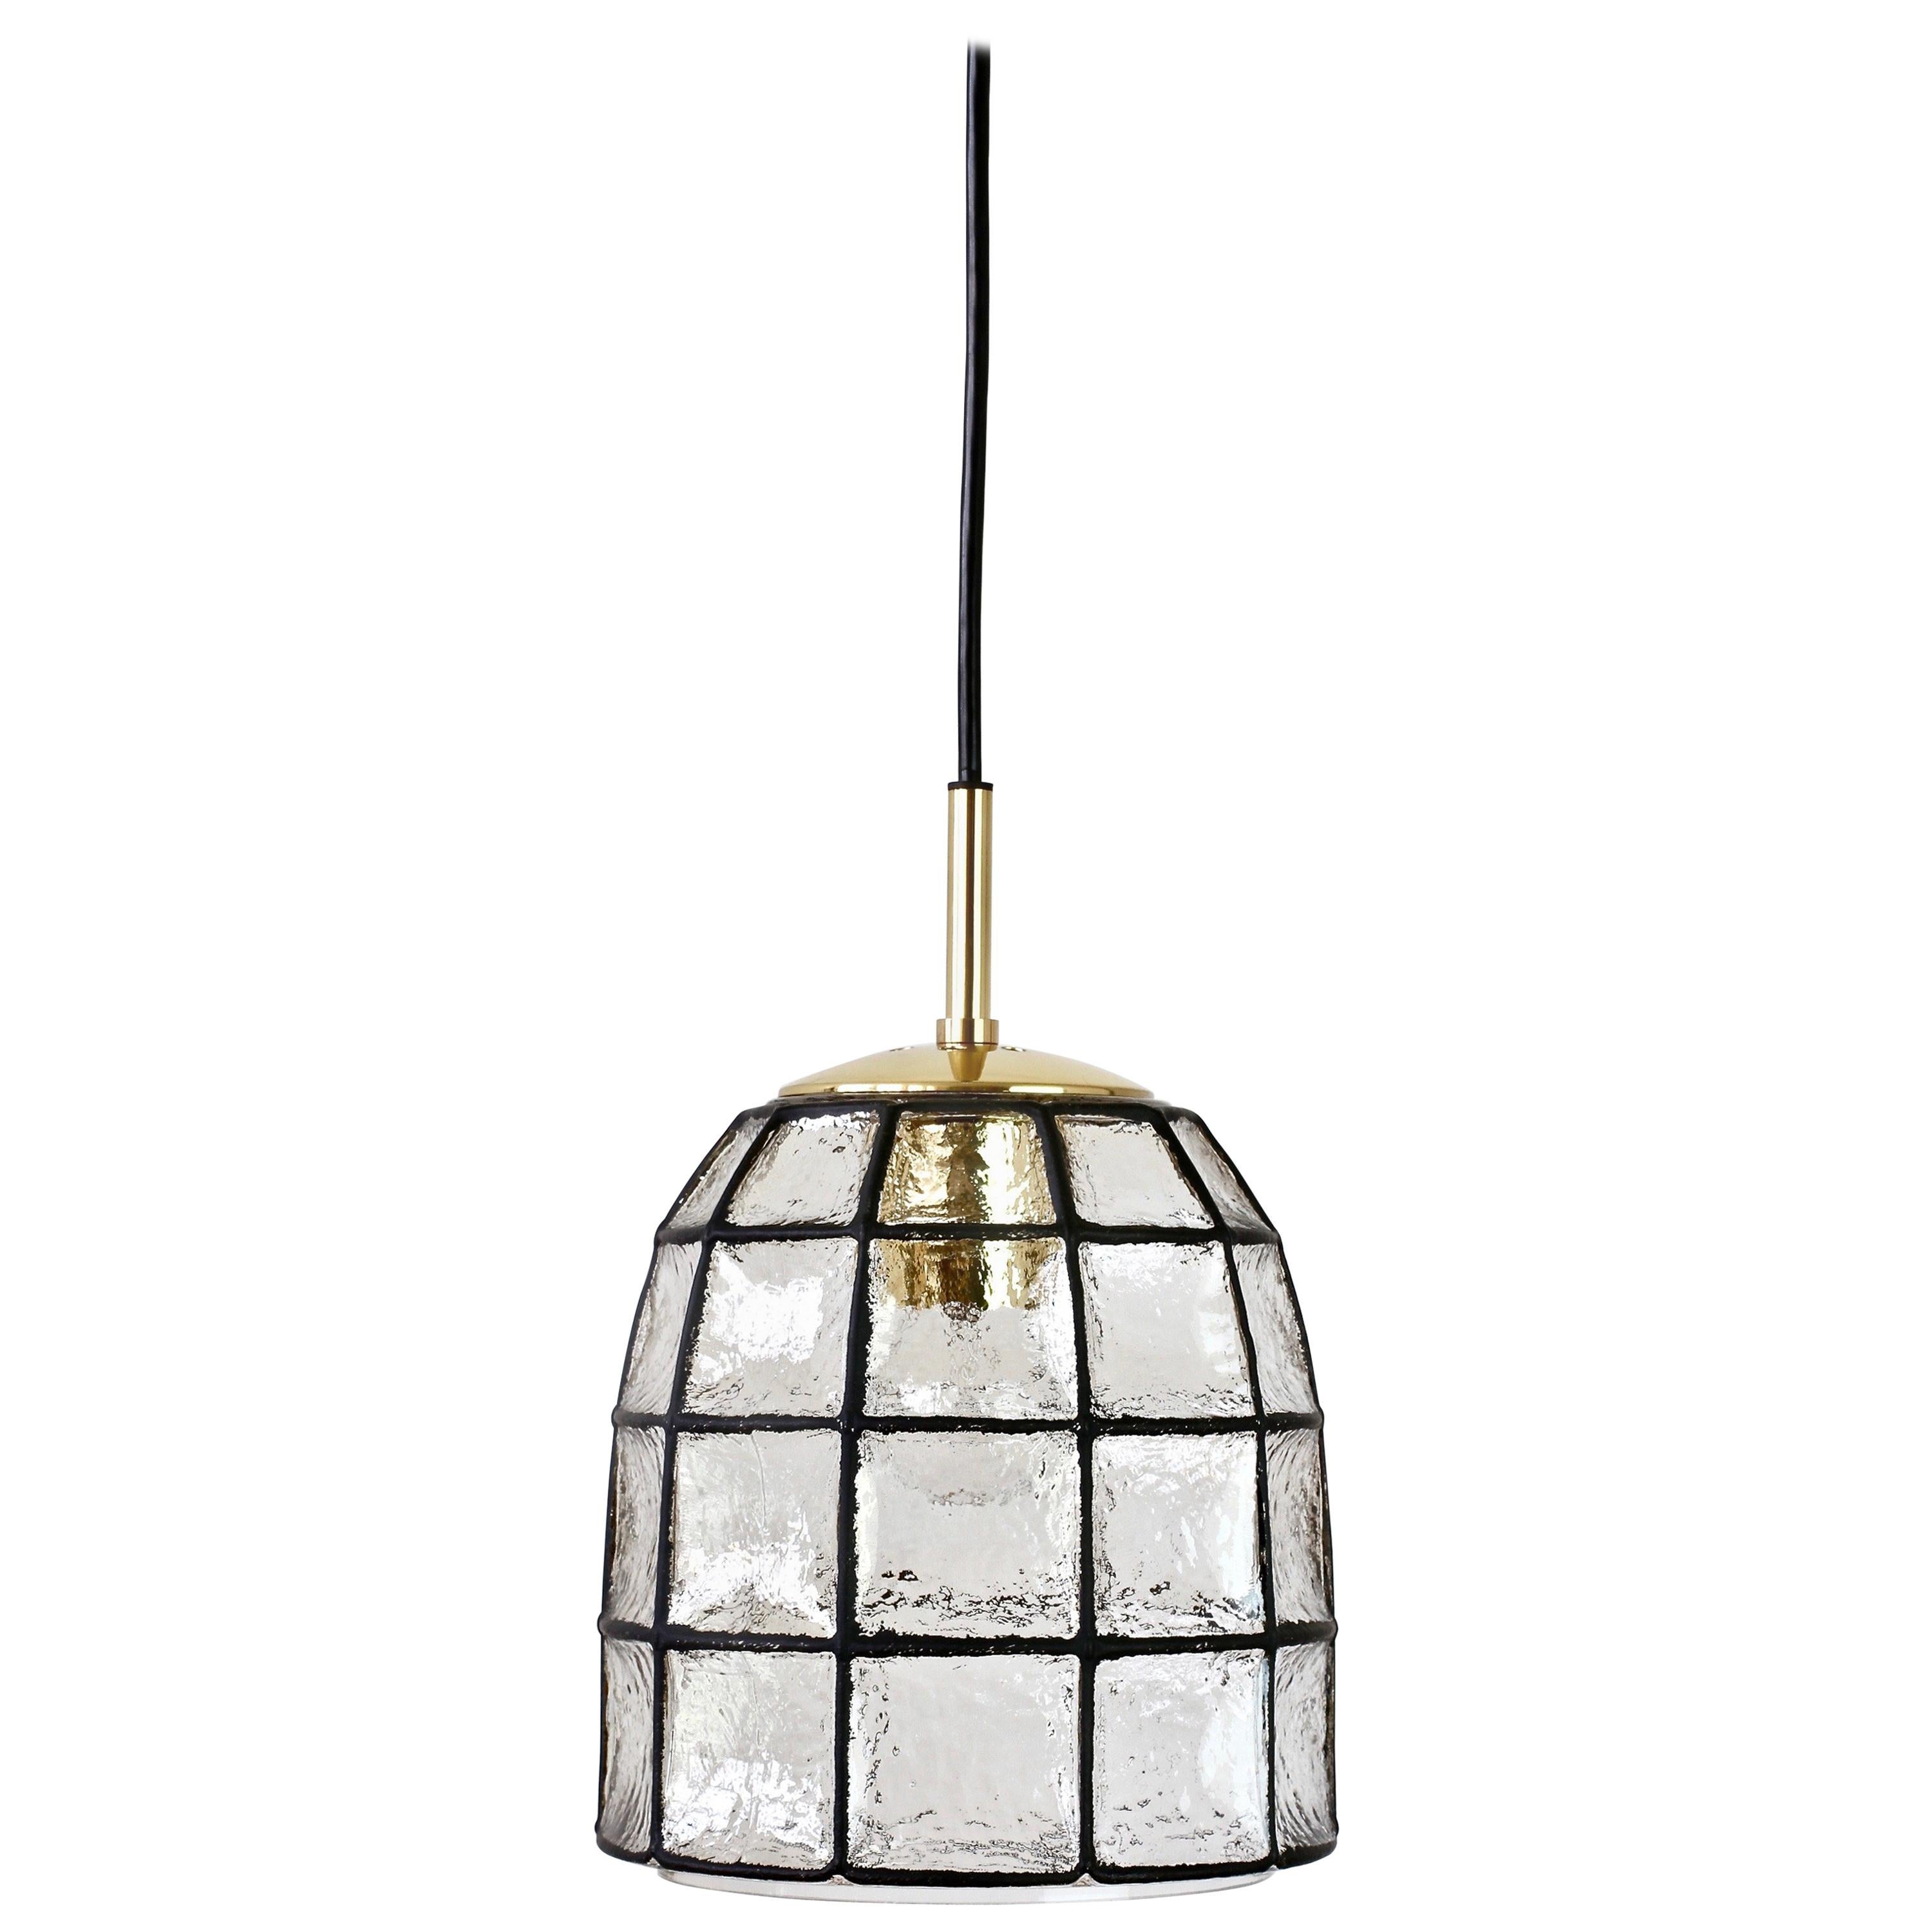 Limburg Midcentury Clear Glass and Brass Bell Pendant Light / Lamp, 1960s